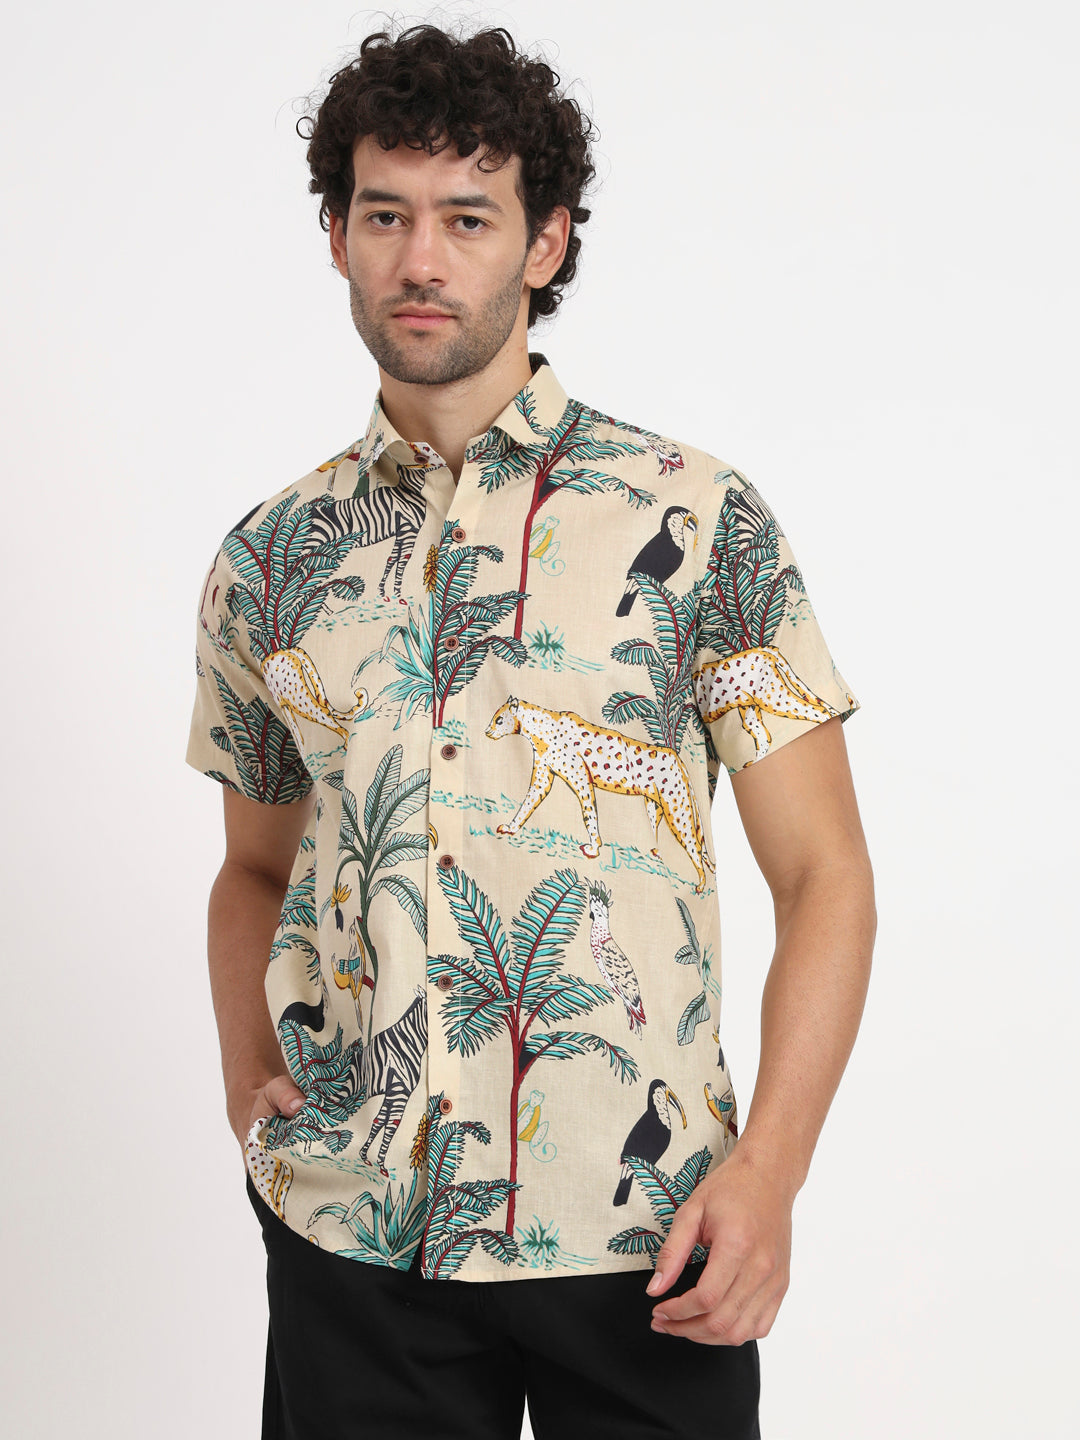 Firangi Yarn Floral Printed Cotton Beige Botanical Shirt For Men | Indian Printed Beach Shirt